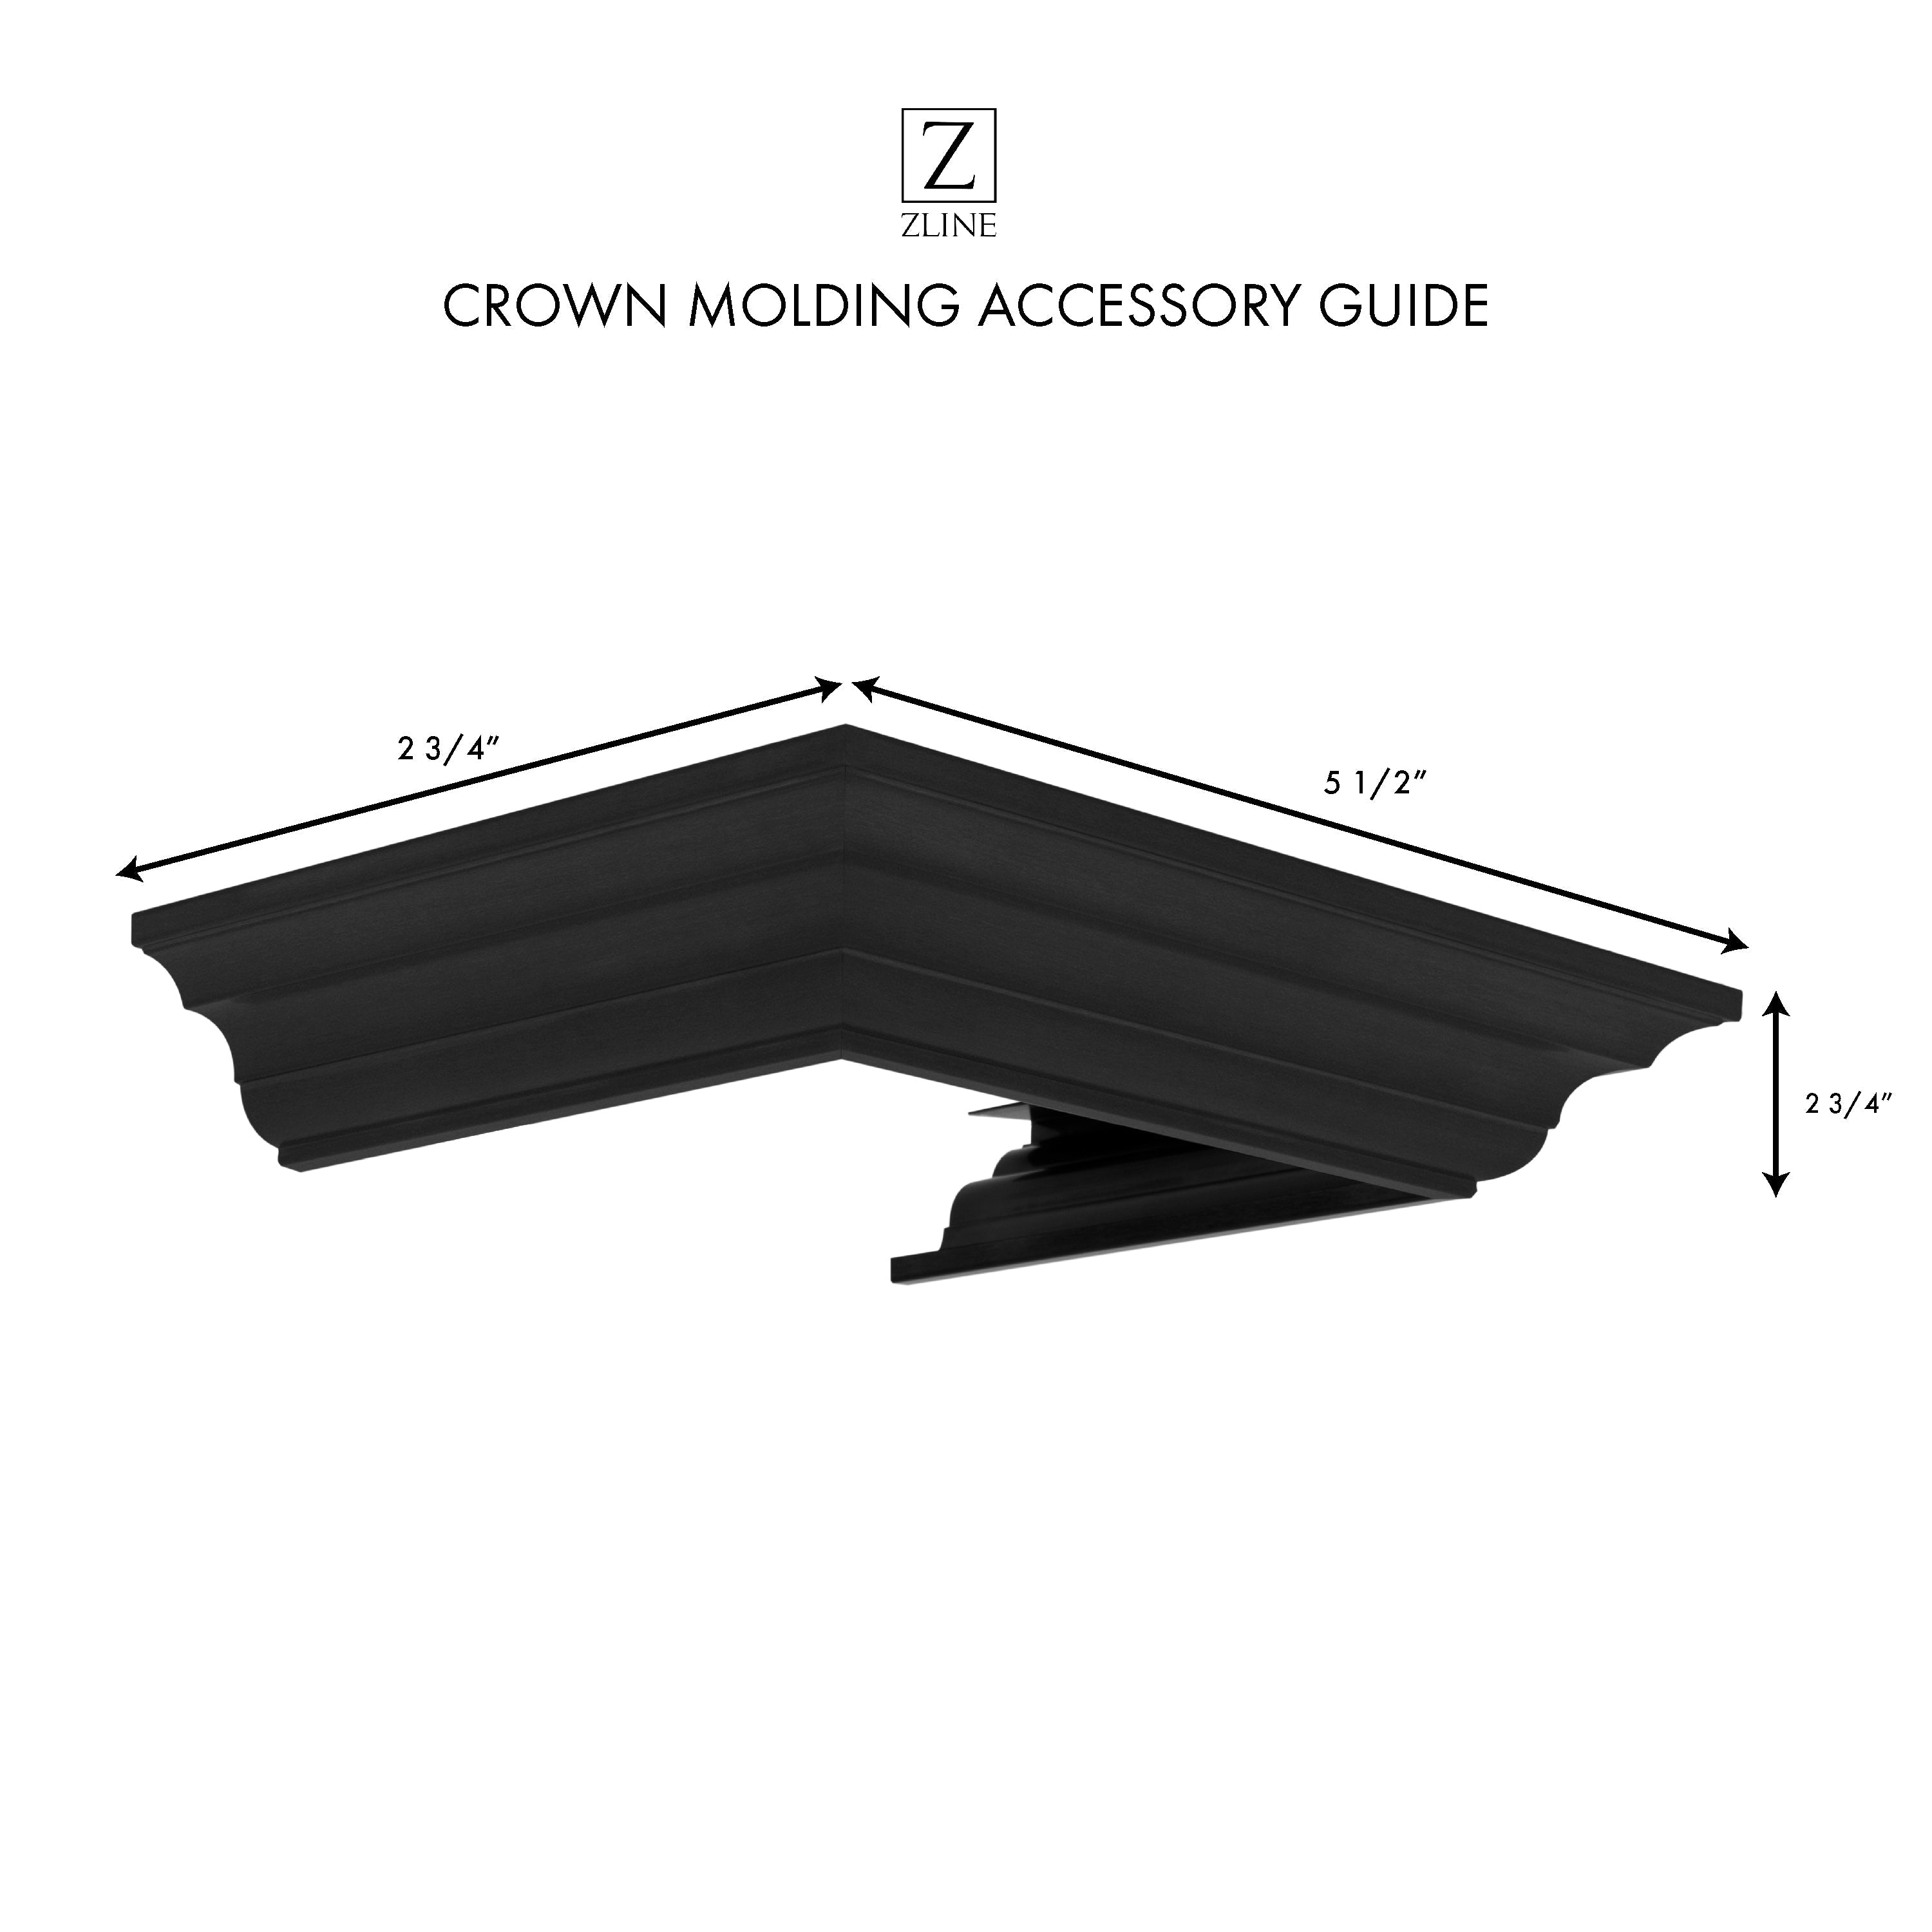 ZLINE Crown Molding Profile 6 for Wall Mount Range Hood (CM6-BS655N)